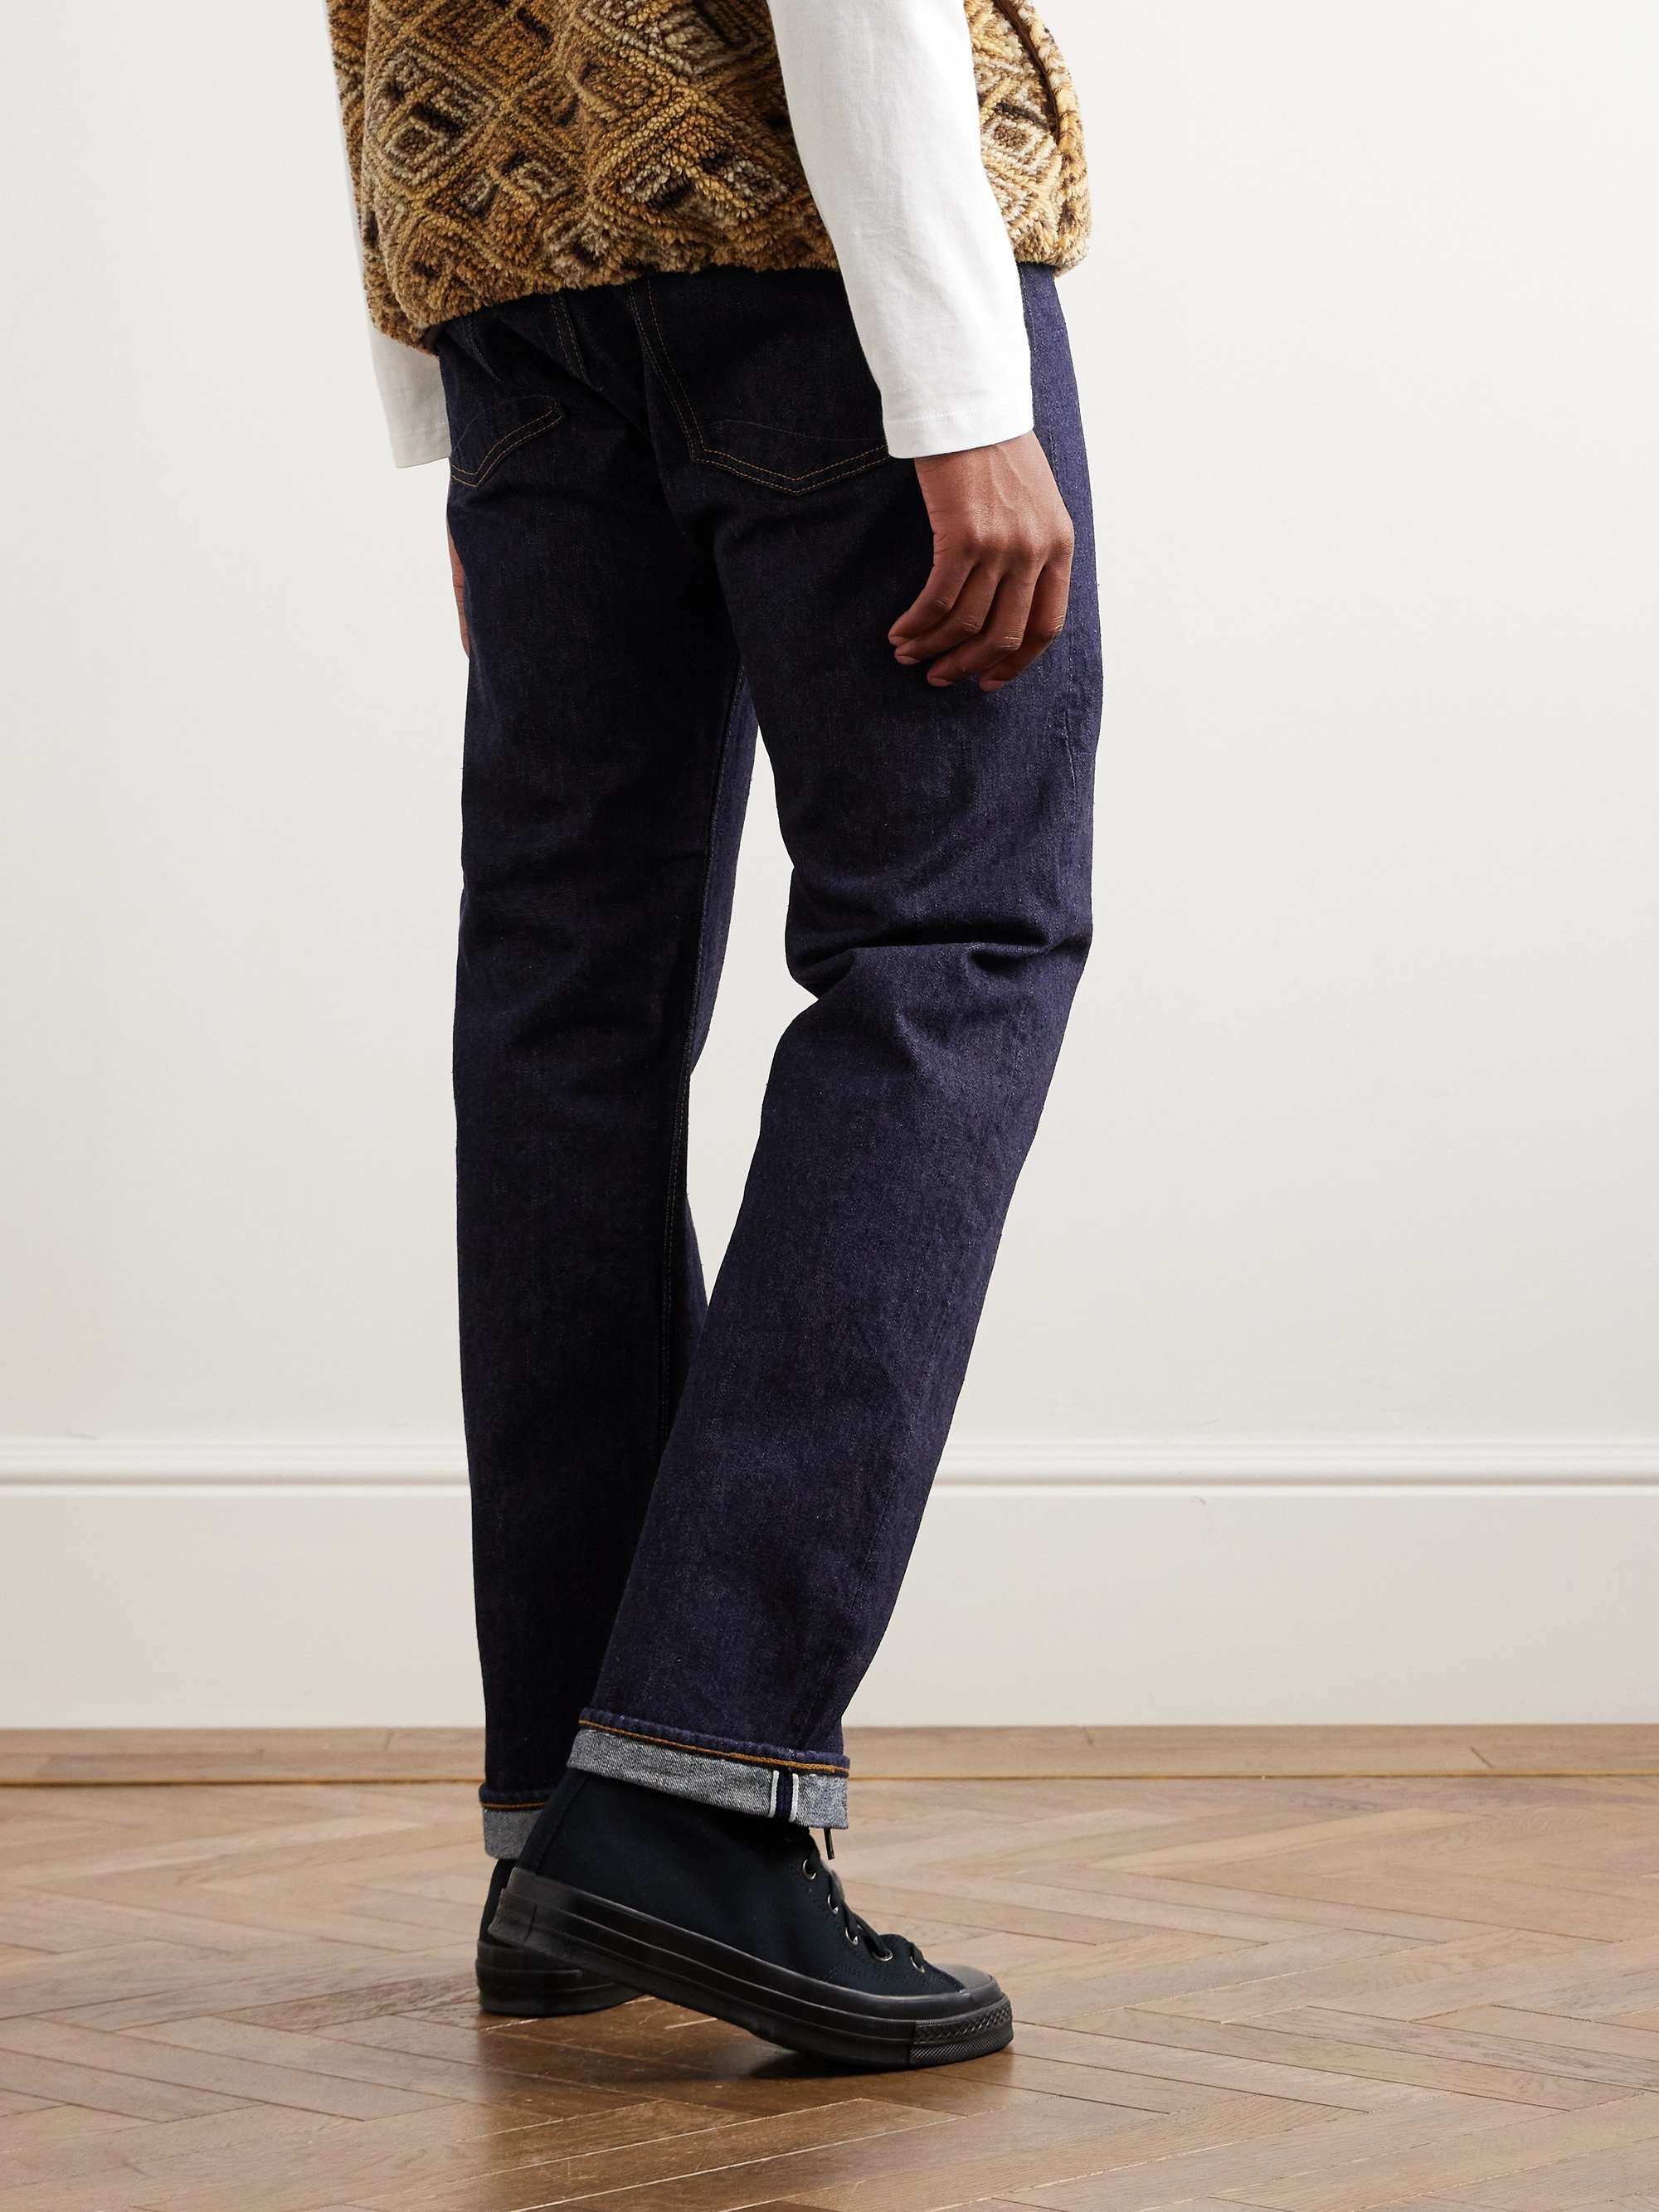 ORSLOW 105 Selvedge Denim Jeans